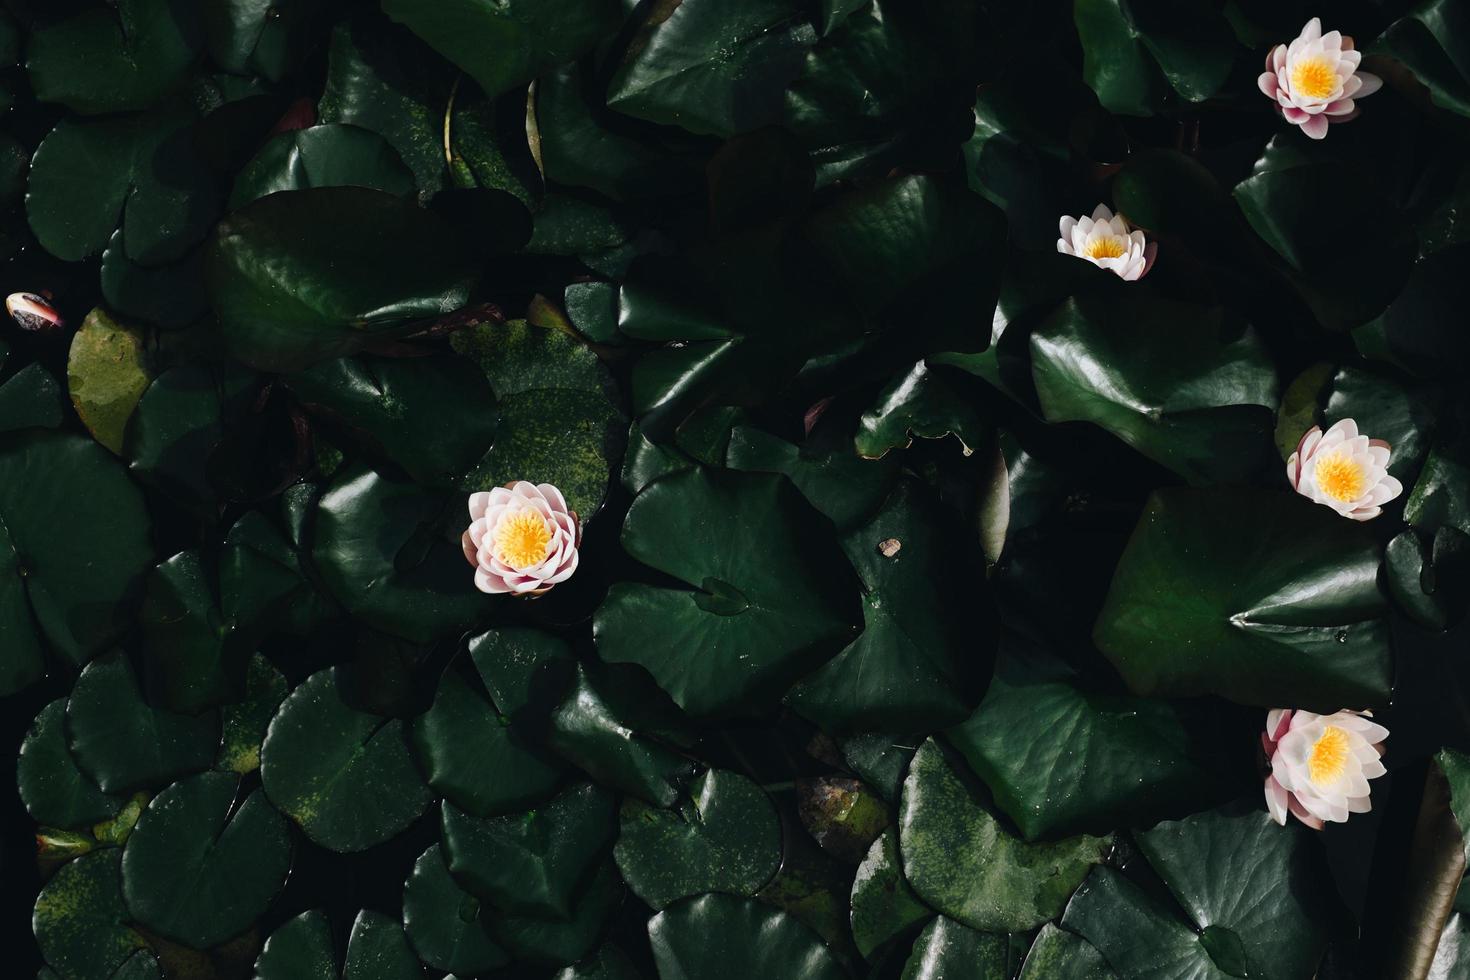 weiße Lotusblume foto